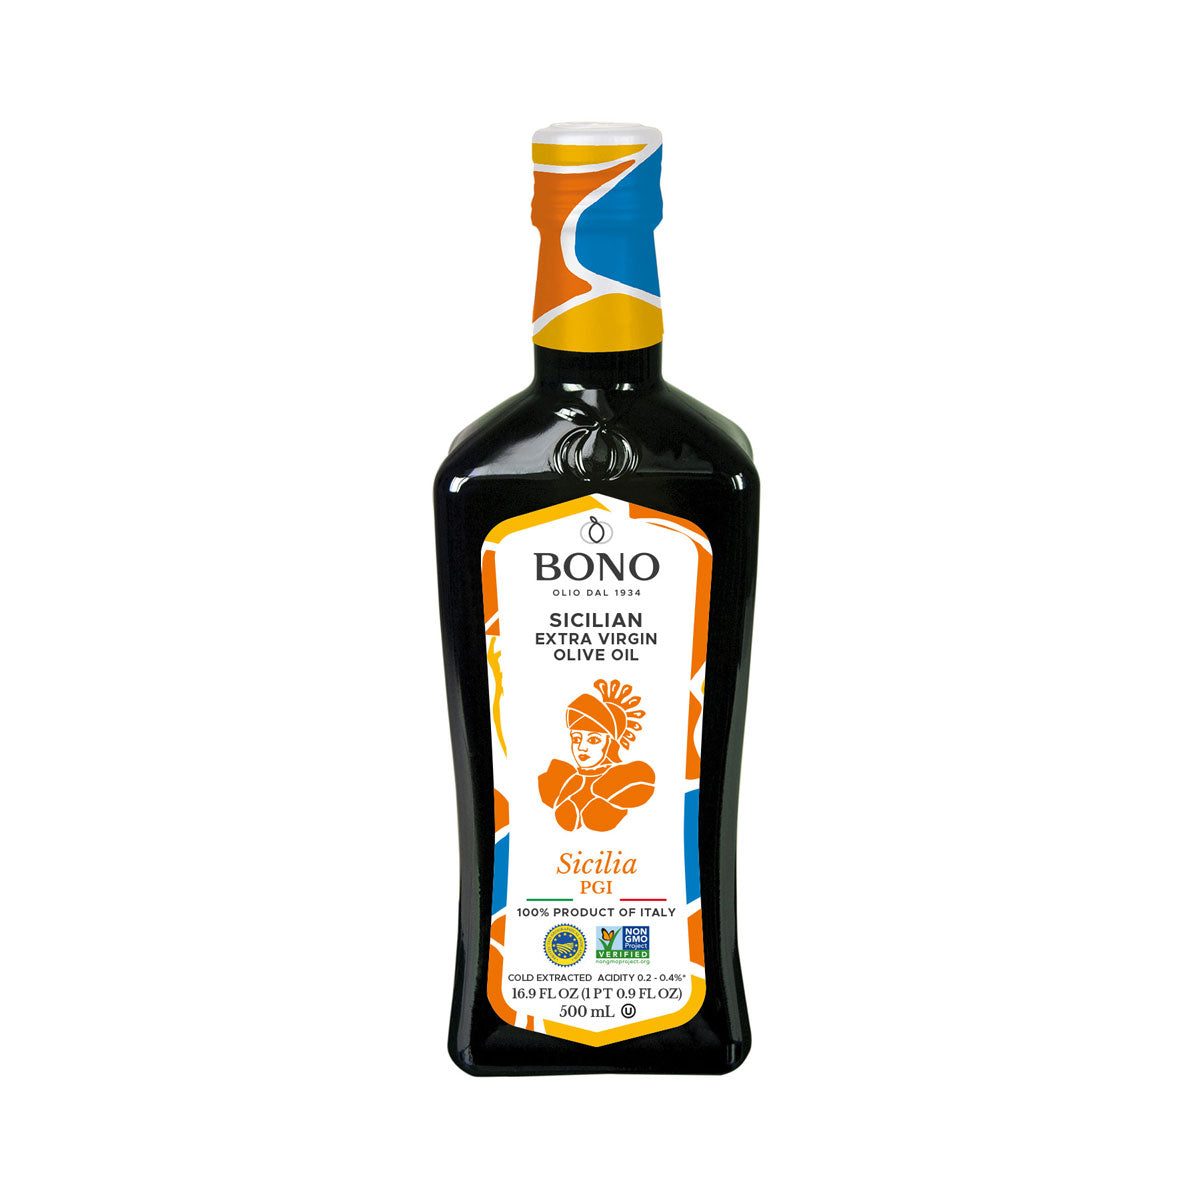 Bono IGP Certified Sicilian Extra Virgin Olive Oil 16.9 Oz Bottle